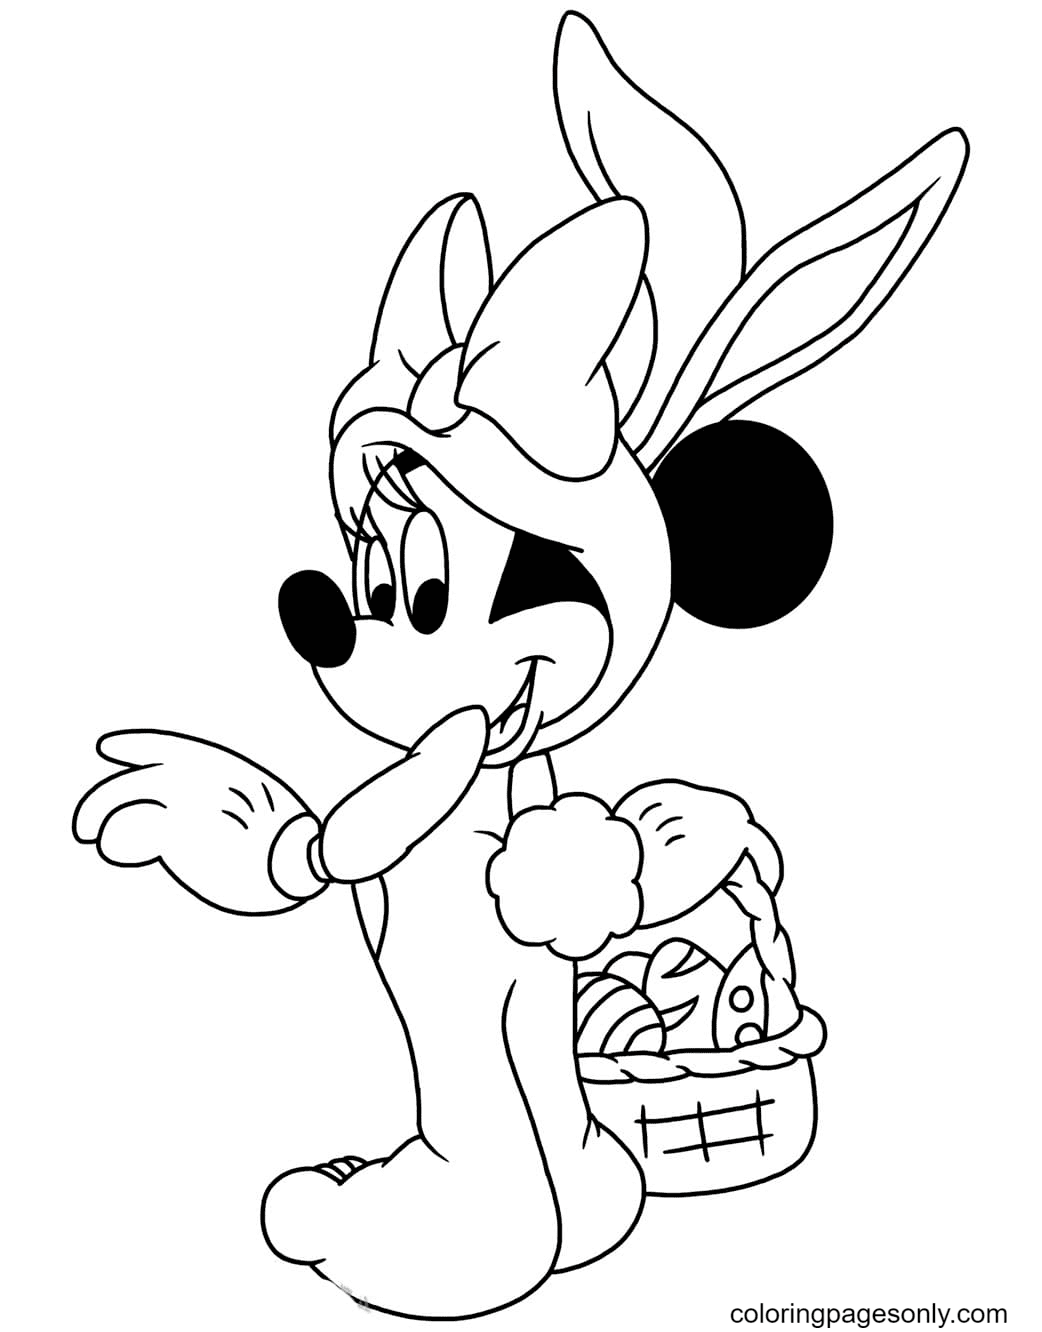 Pasen Minnie Mouse van Minnie Mouse